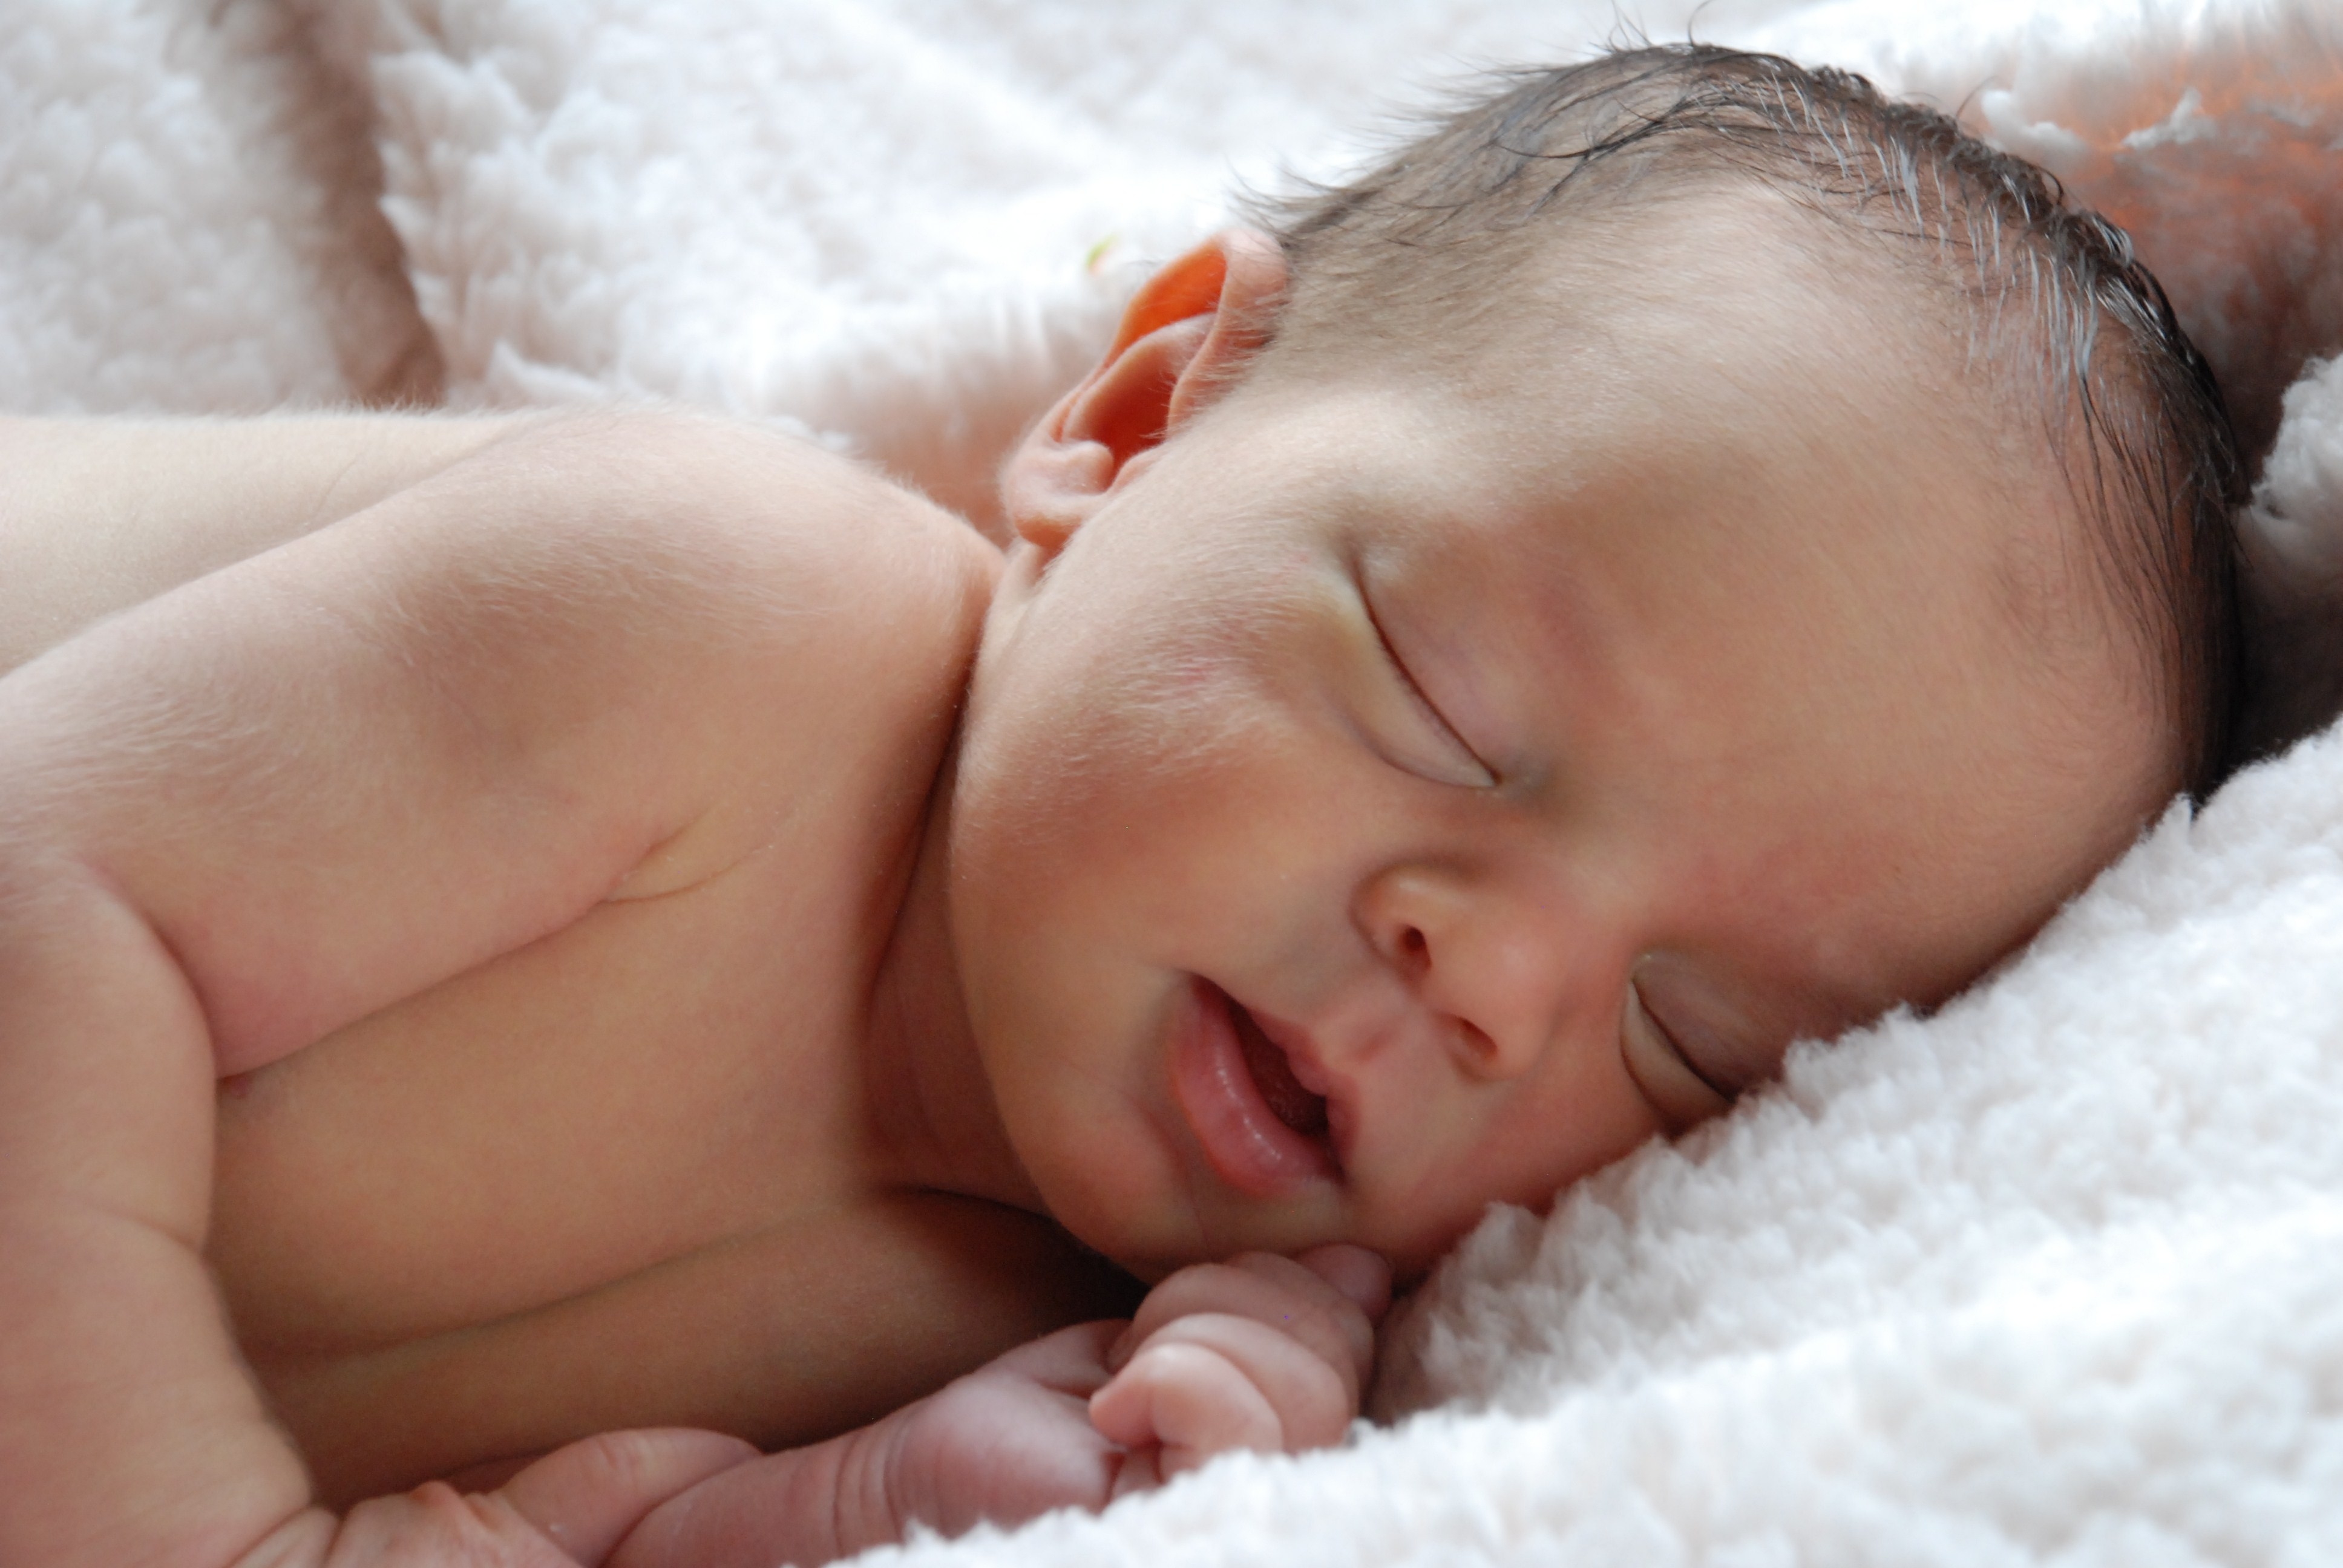 A newborn baby sleeping on a white, fluffy blanket.